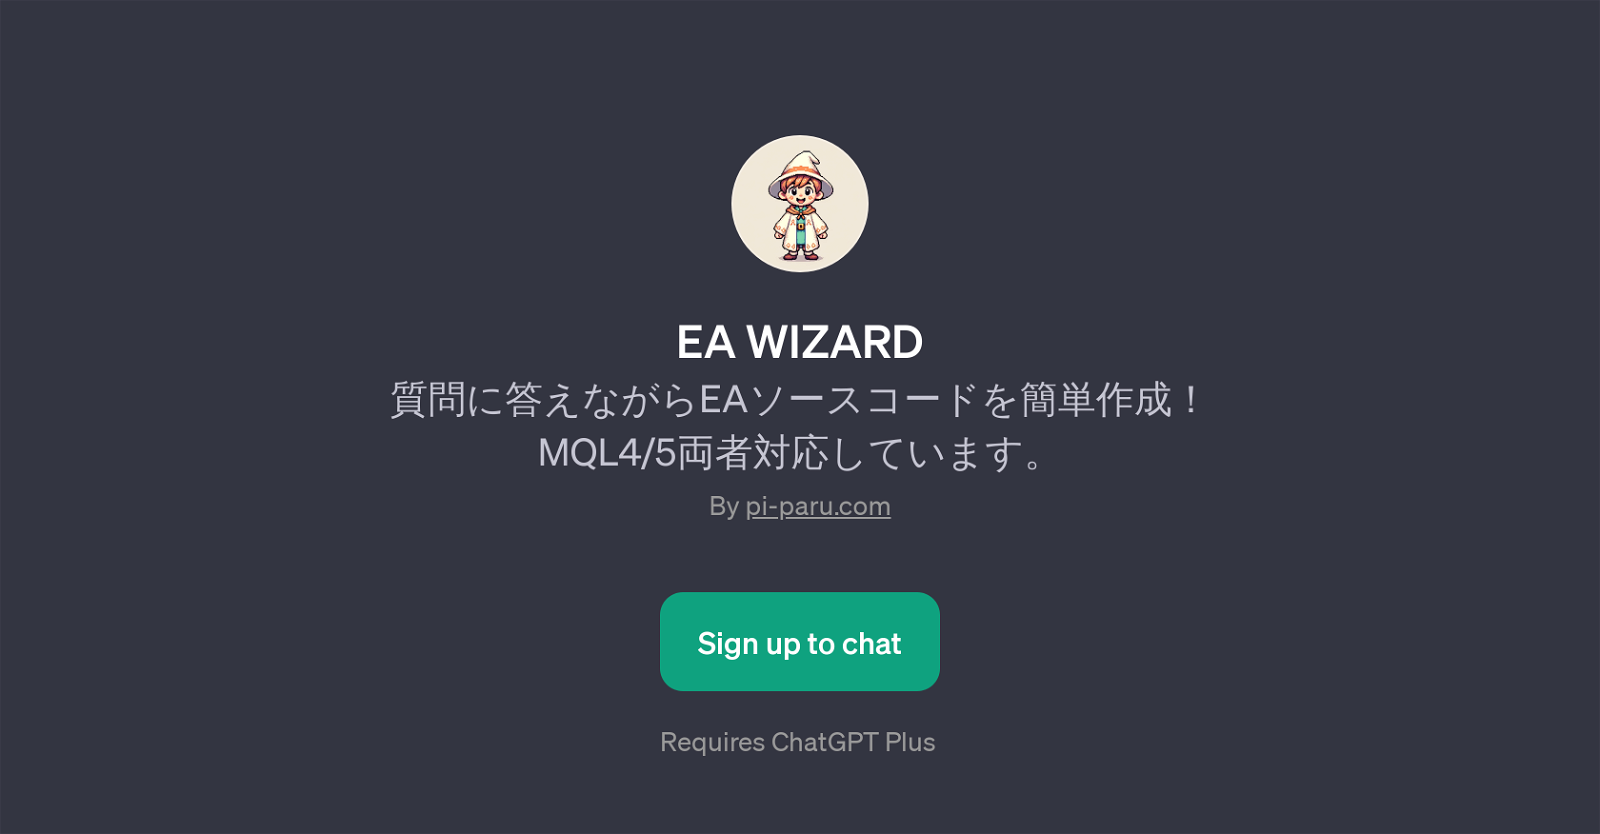 EA WIZARD website